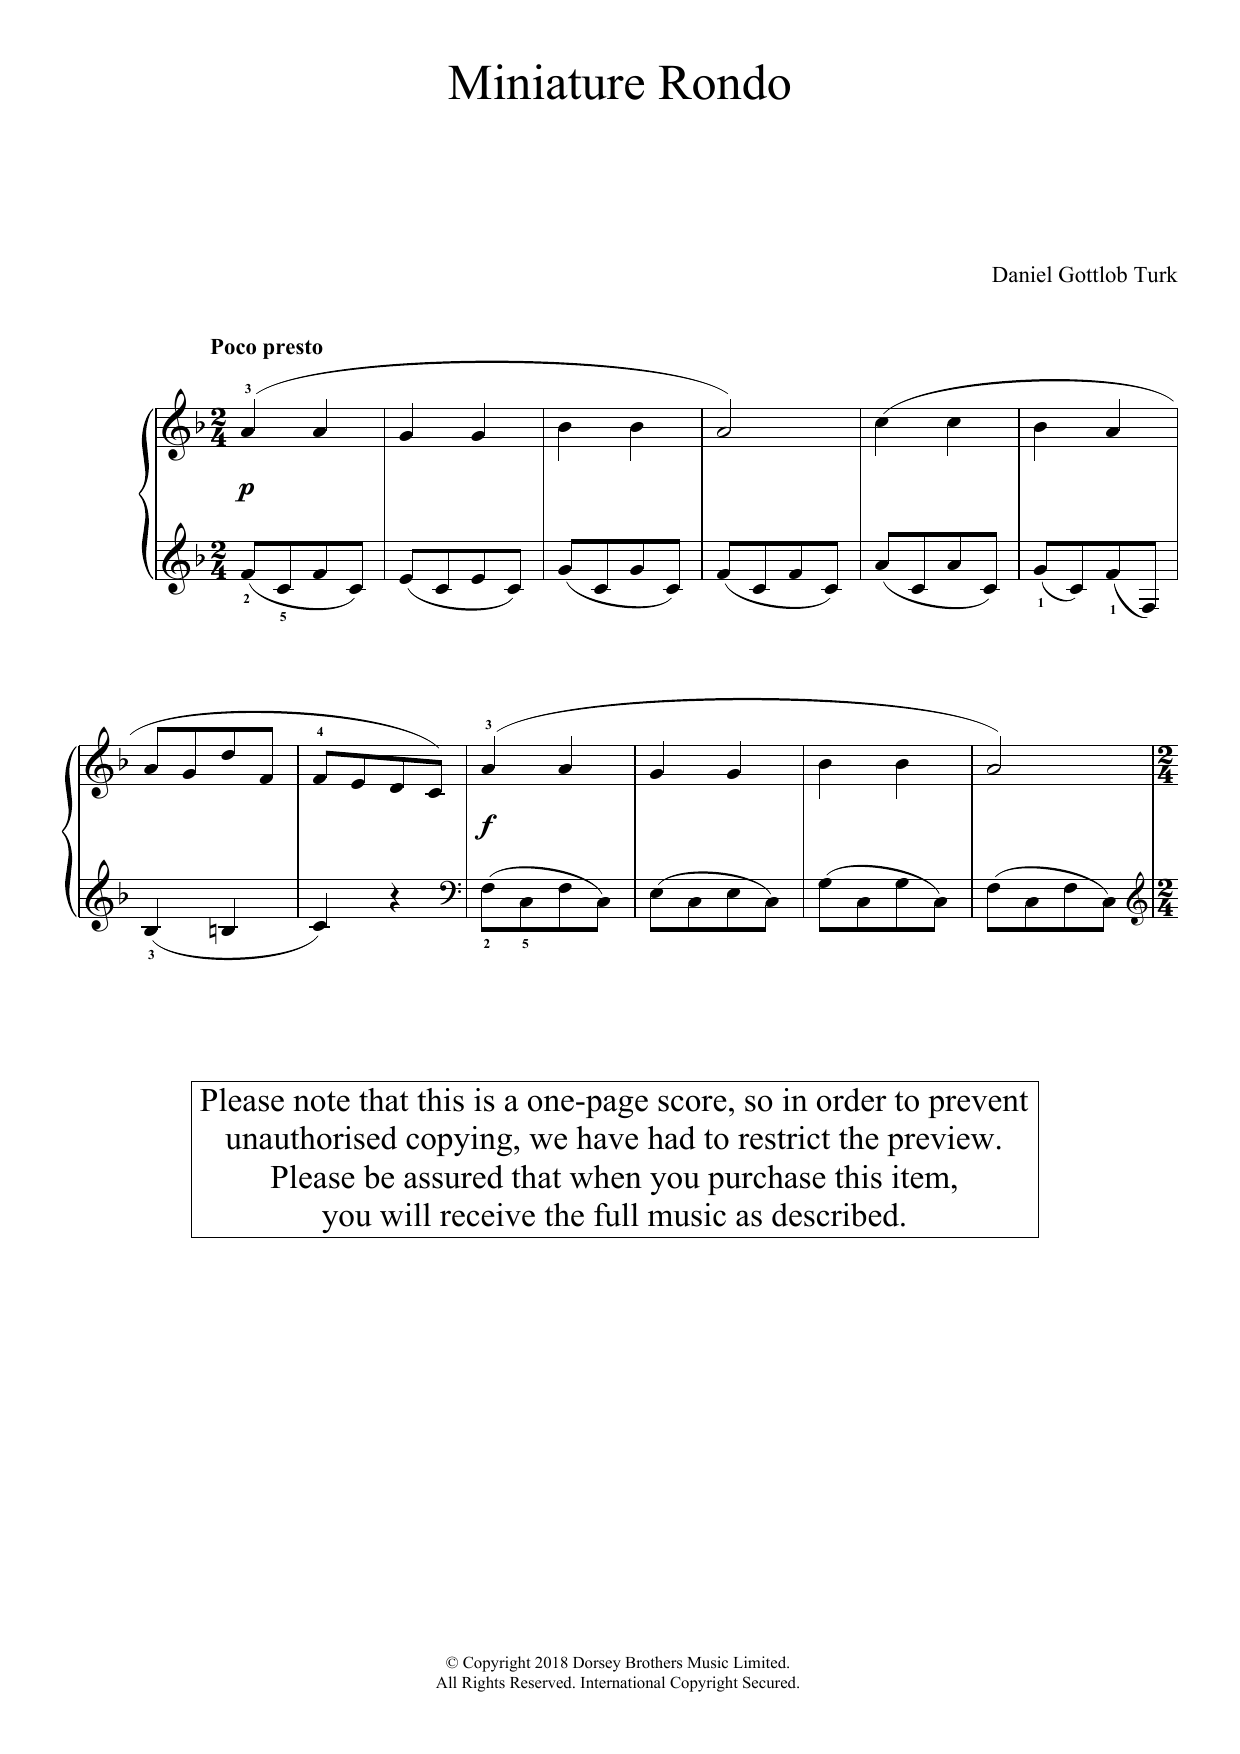 Daniel Gottlob Türk Miniature Rondo Sheet Music Notes & Chords for Piano - Download or Print PDF